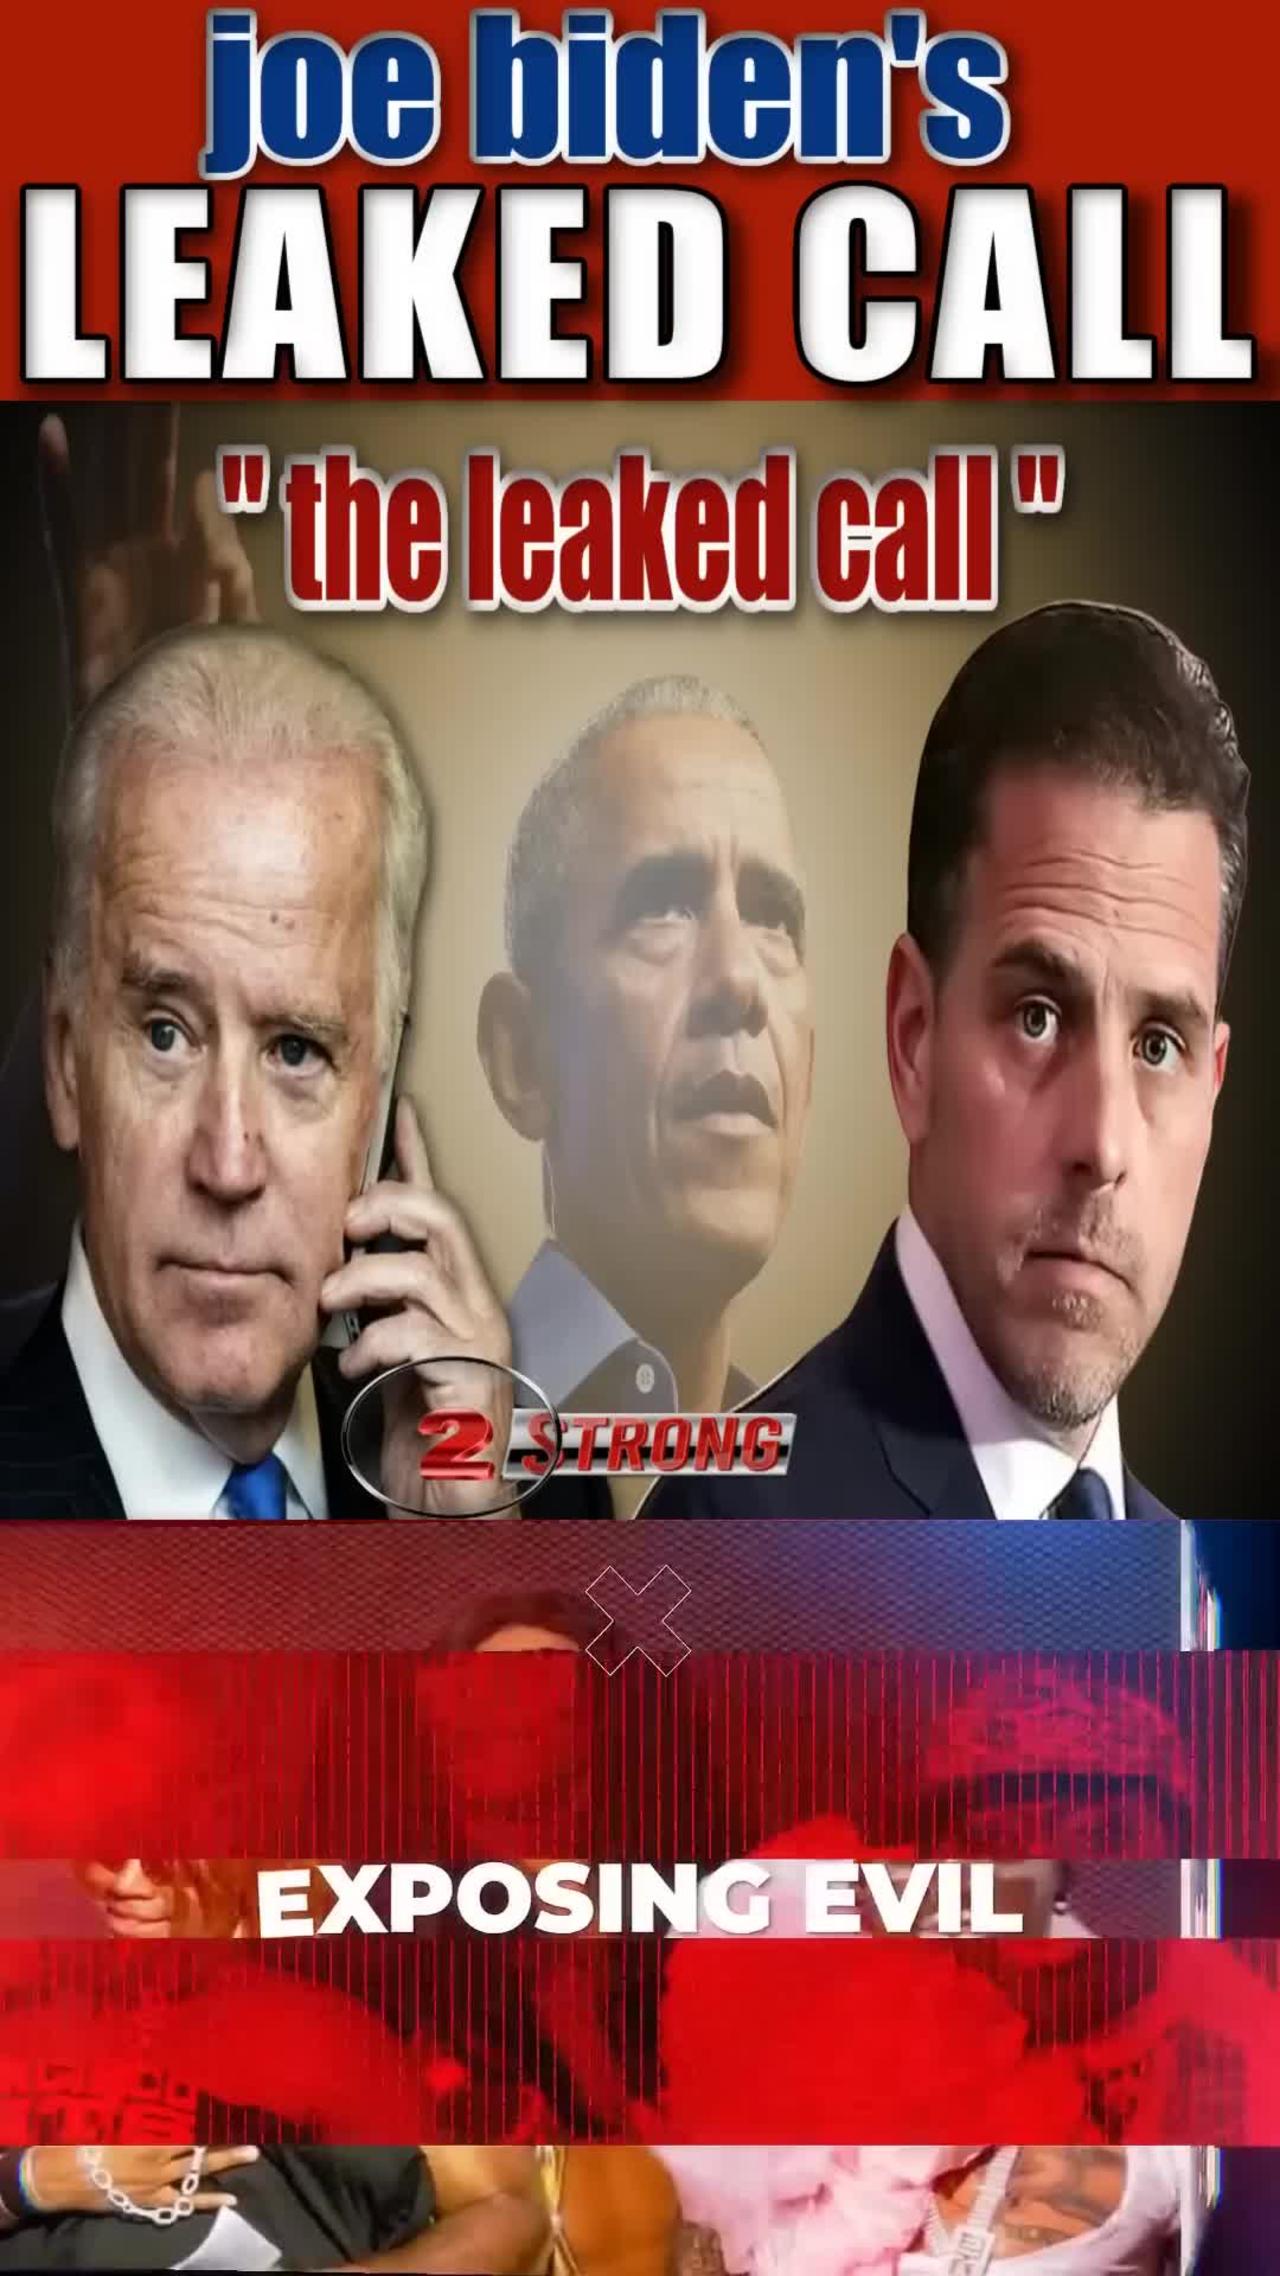 Joe Biden's LEAKED CALL